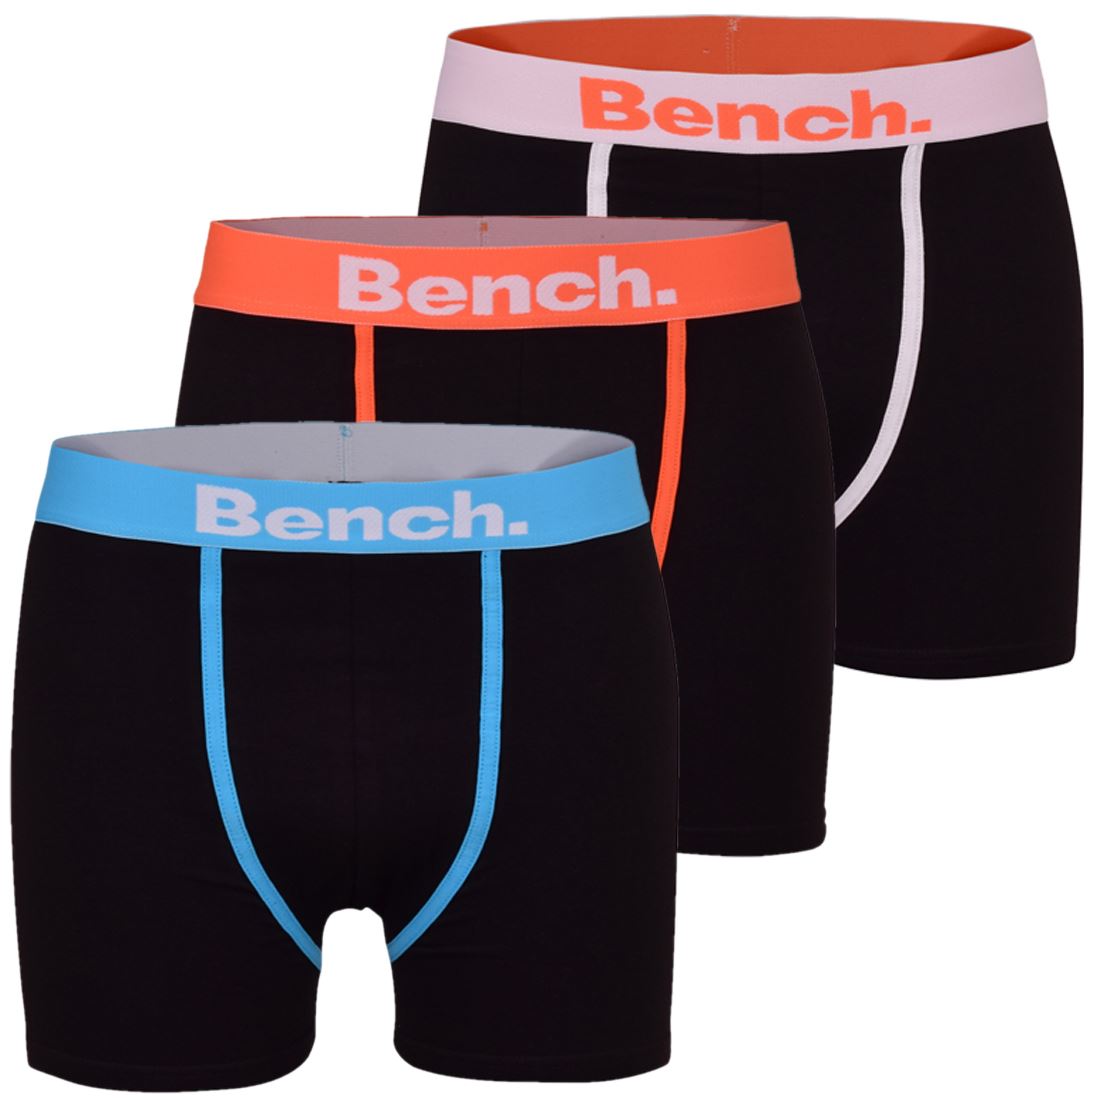 Bench 3 Pack Mens Designer Boxers Underwear Trunks Boxer Shorts Underpants Gift Set